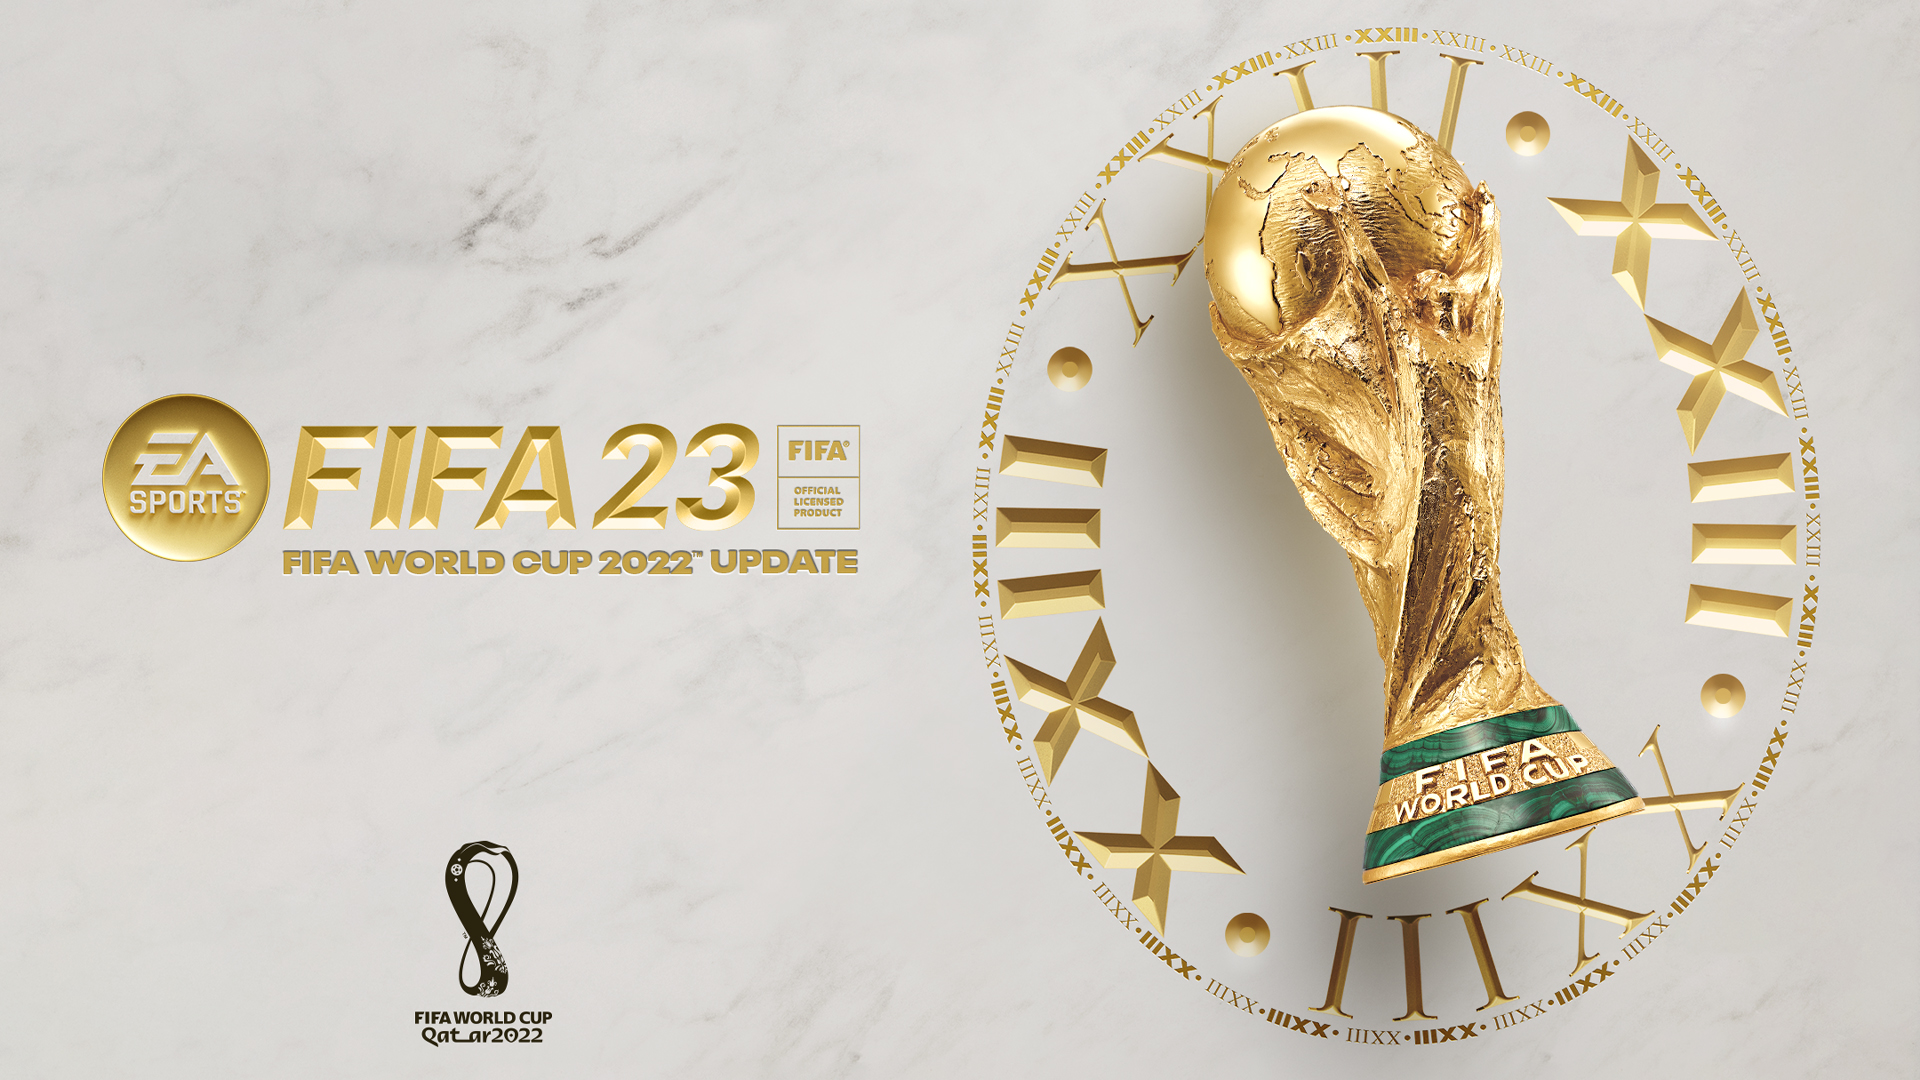 Free FIFA World Cup 2022 Updates Coming to FIFA 23 November 9